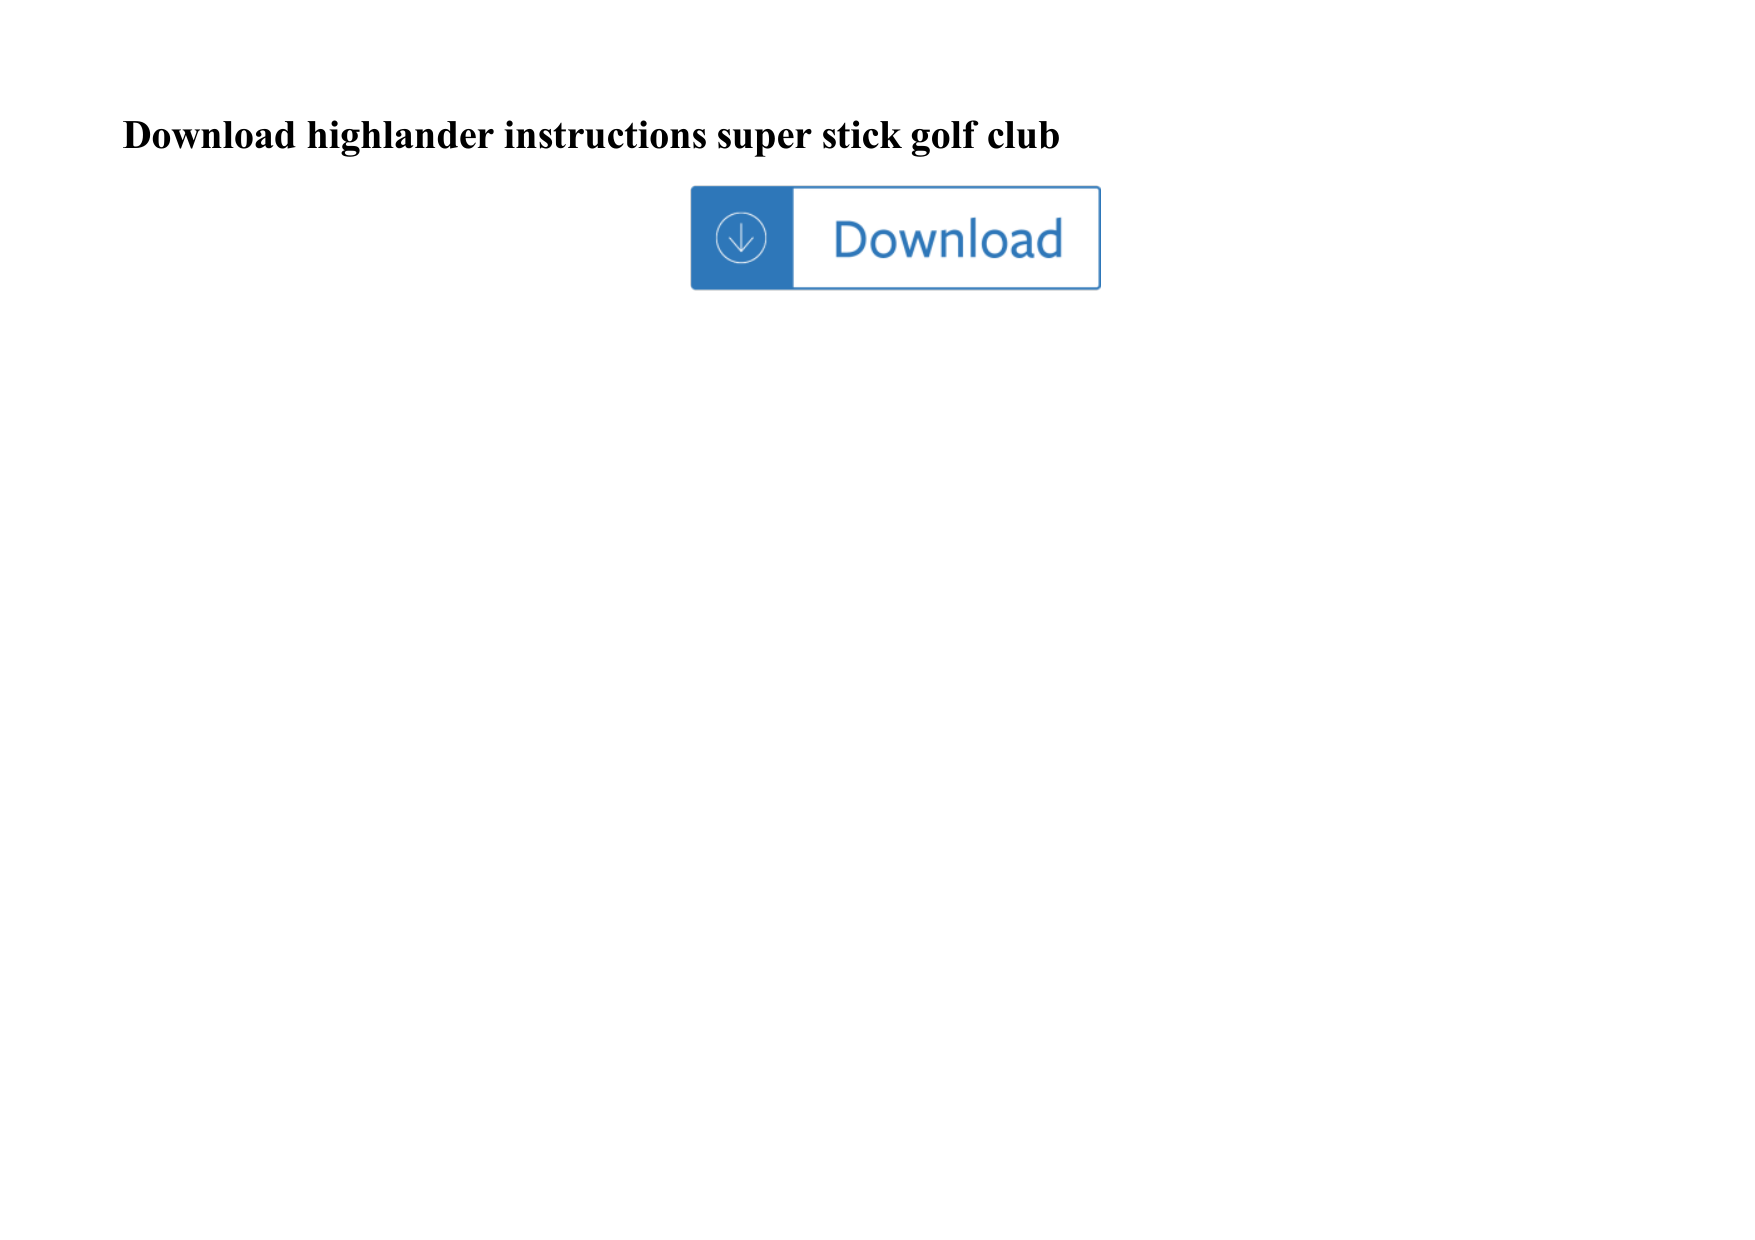 Highlander Instructions Super Stick Golf Club